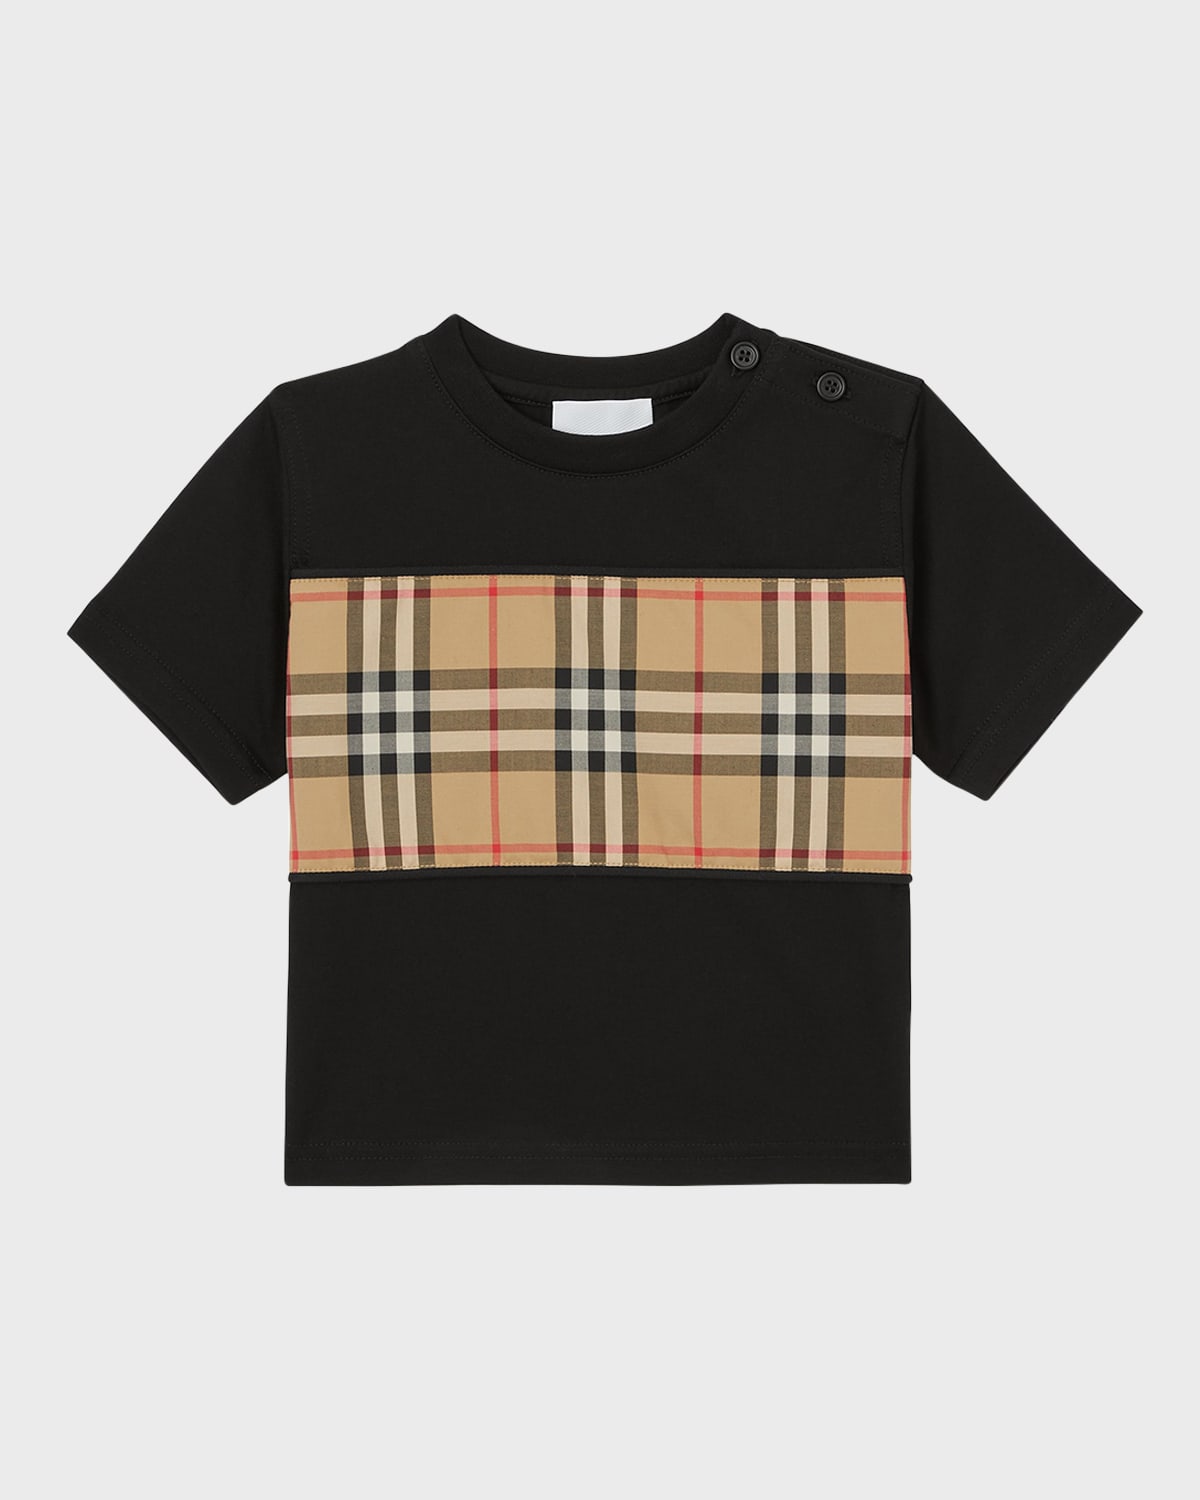 Kid's Cedar Vintage Check-Print T-Shirt, Size 6M-2